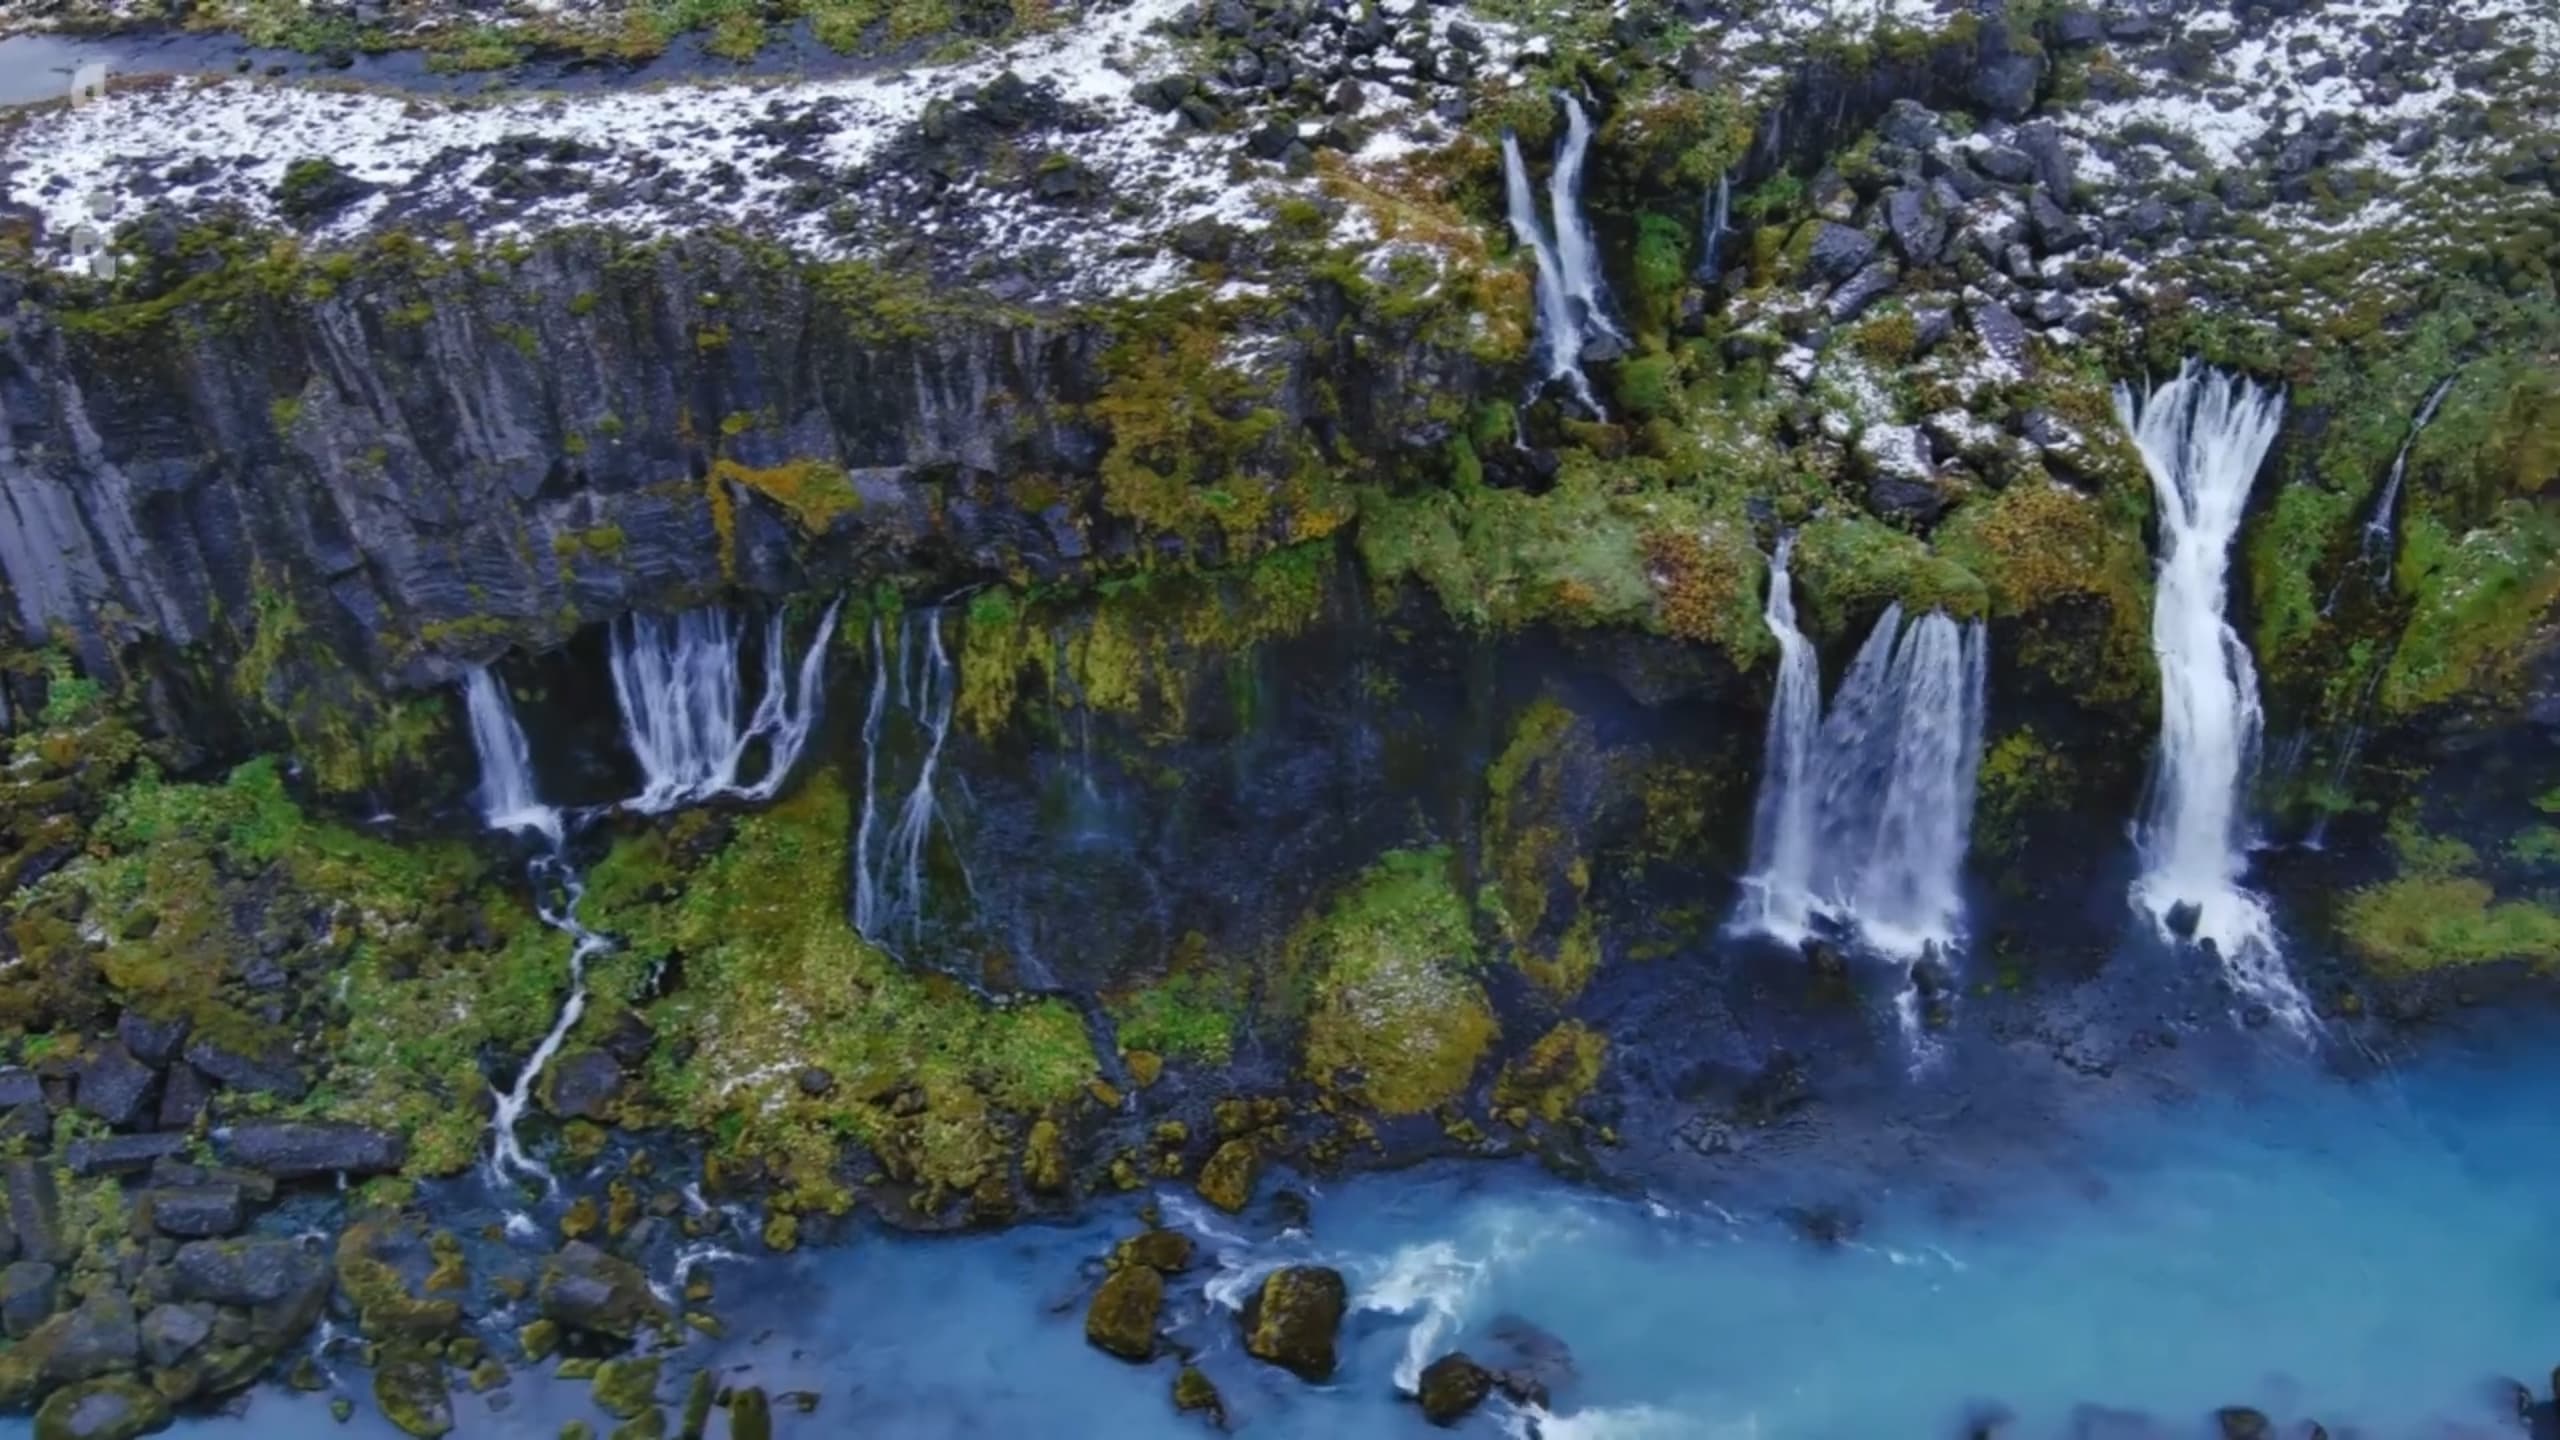 Islande, la quête des origines